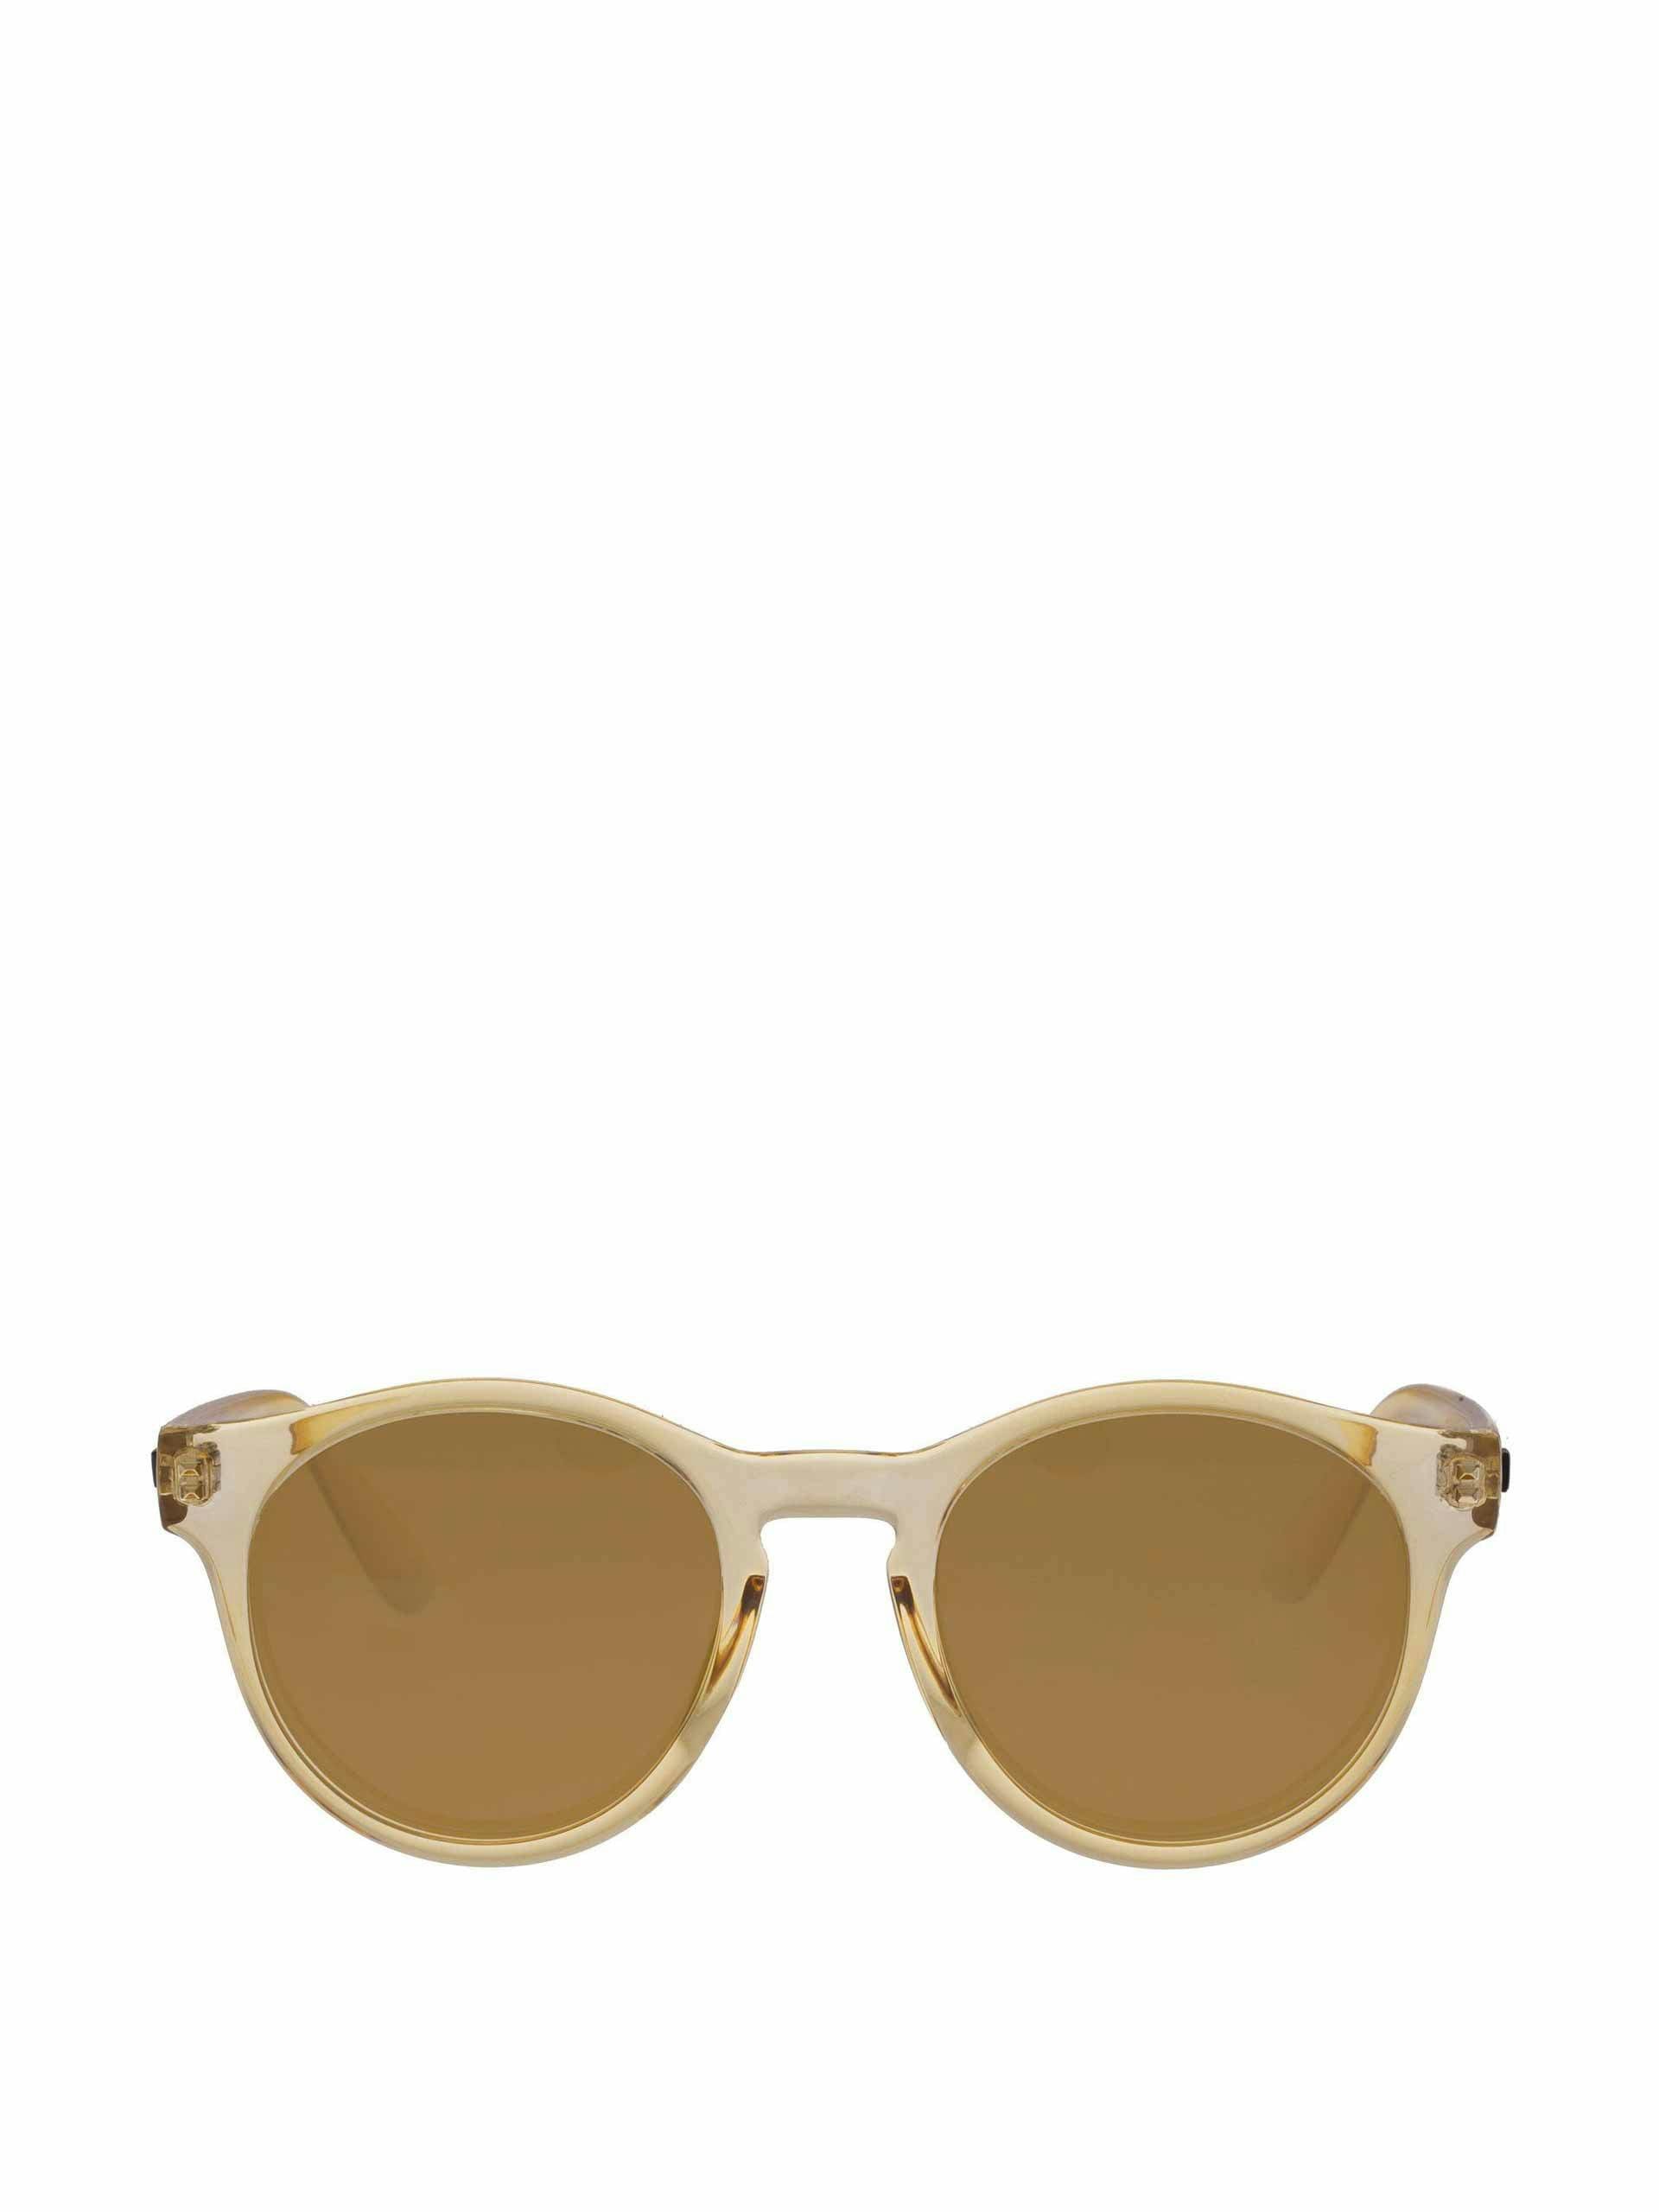 Blonde polarized sunglasses